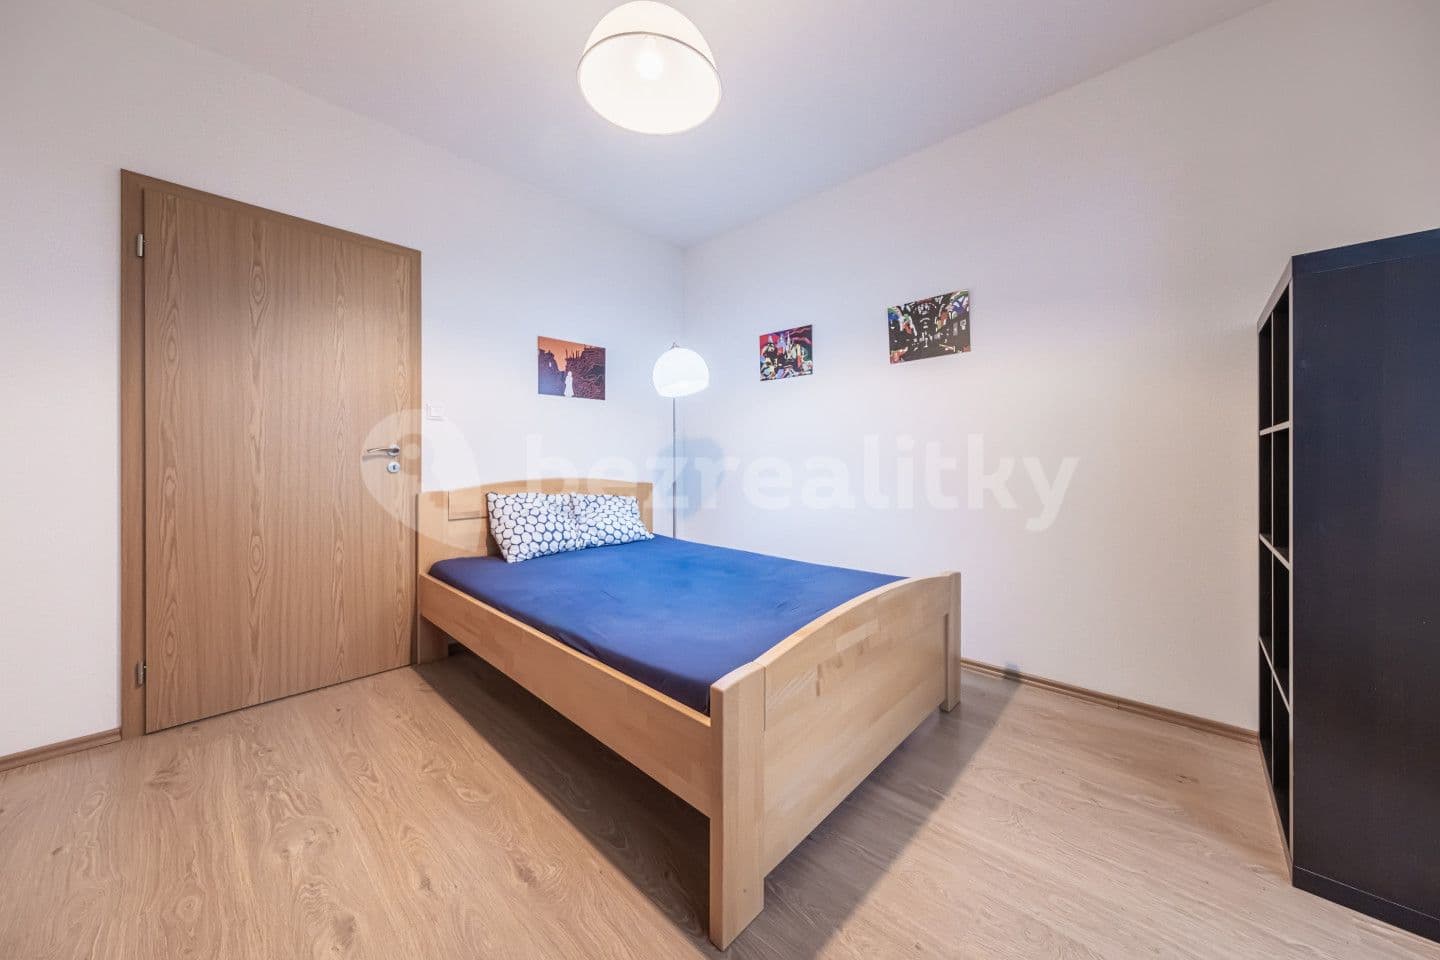 2 bedroom with open-plan kitchen flat for sale, 78 m², Březenská, Prague, Prague